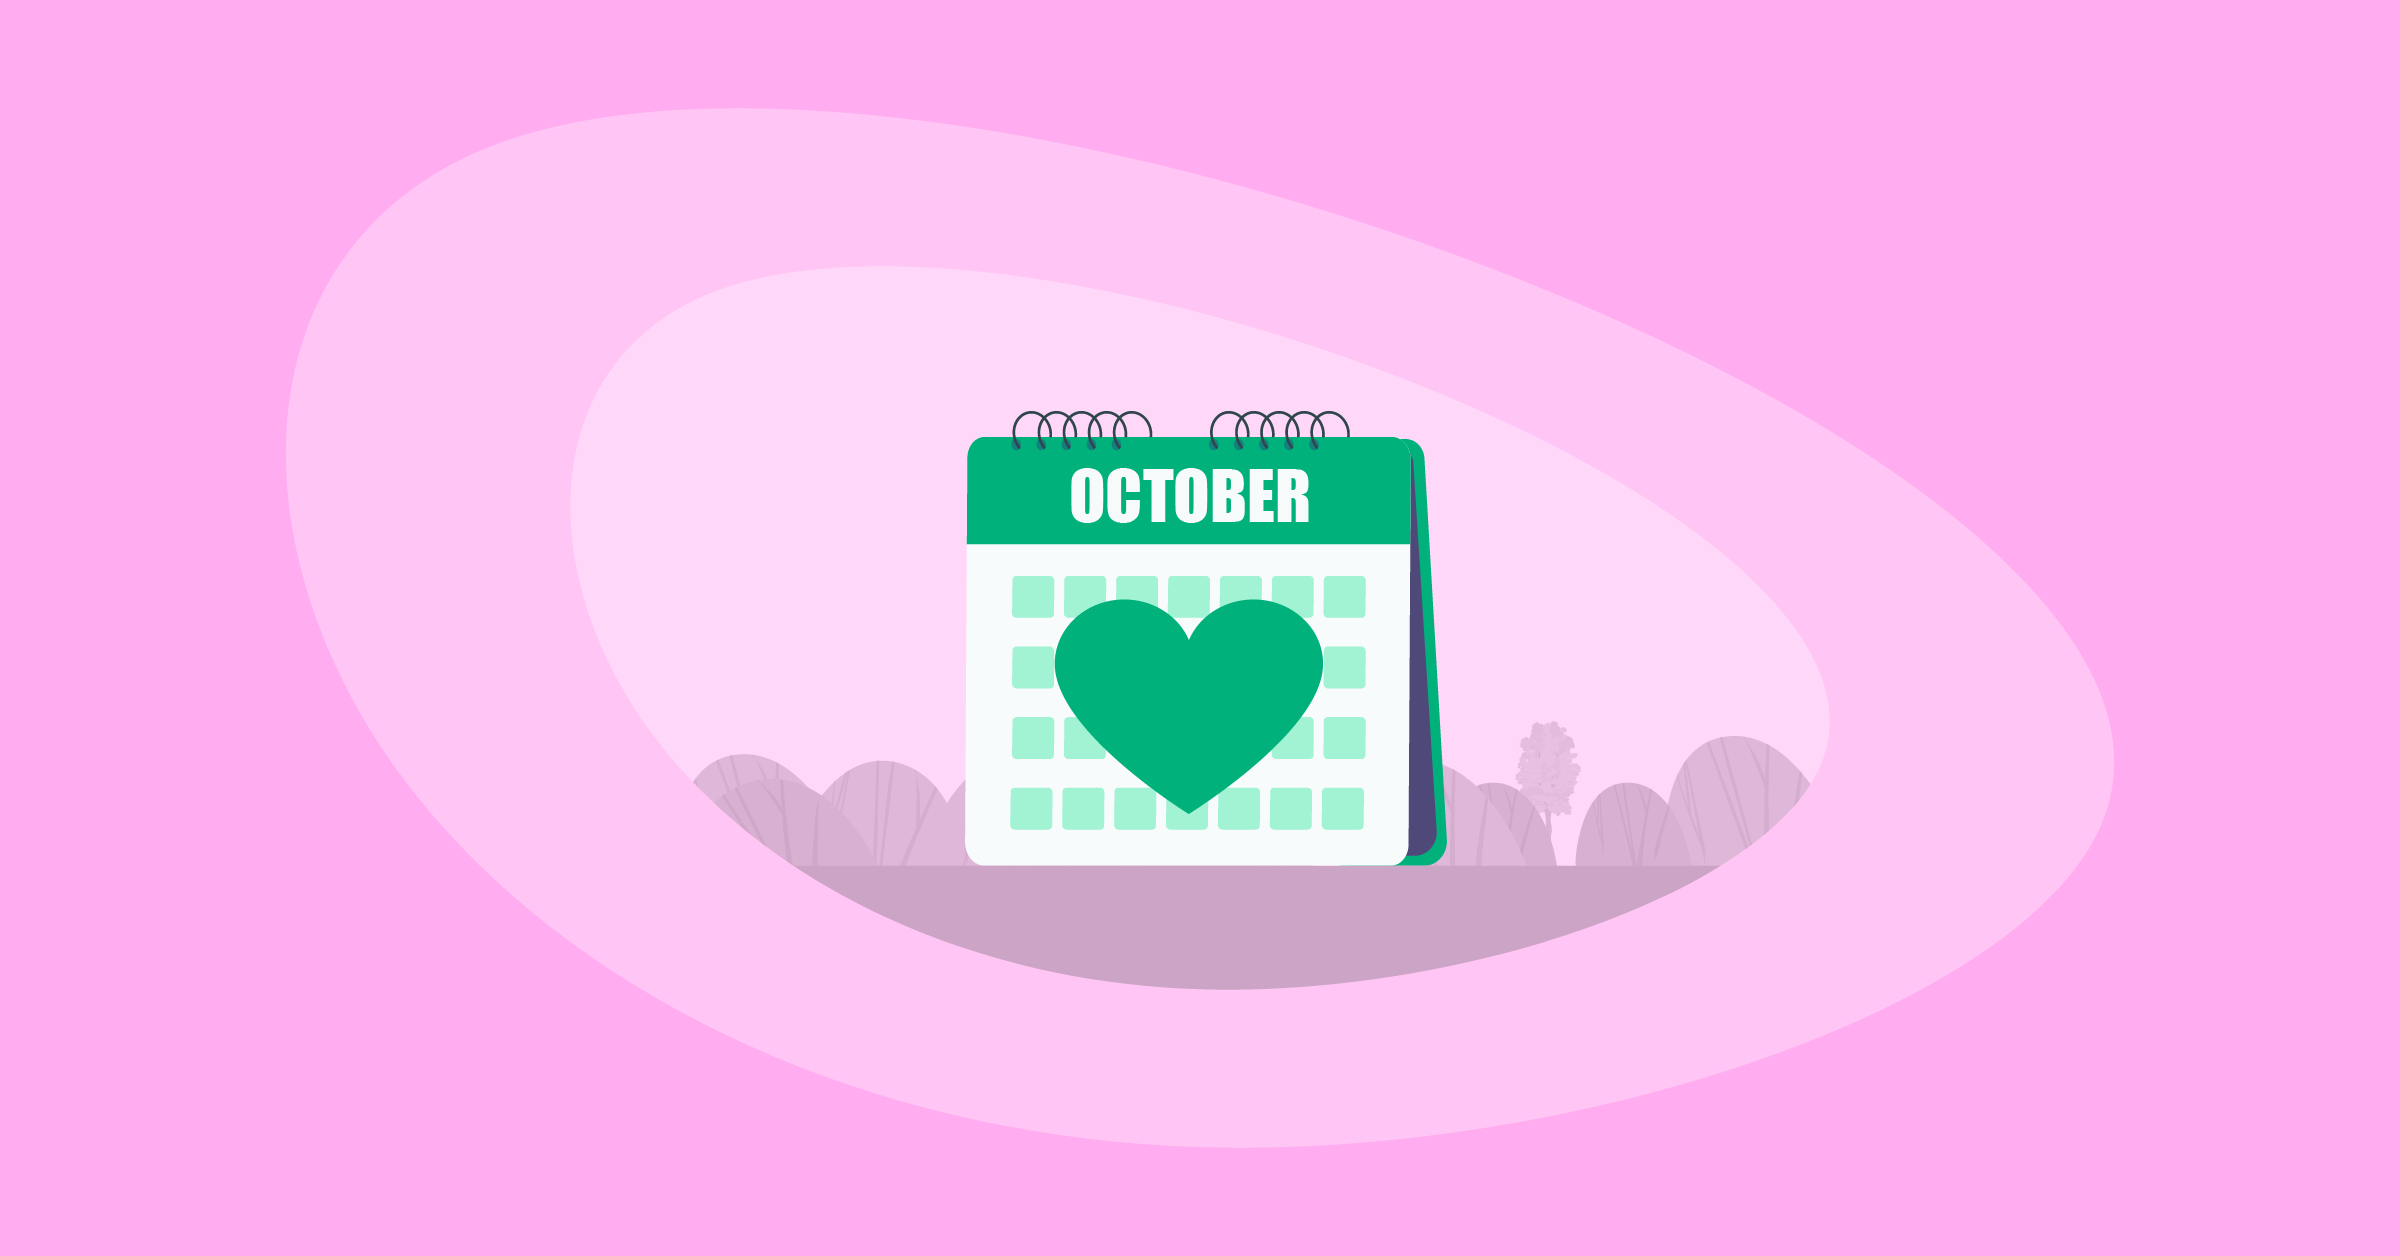 Illustration of an awareness calendar for October